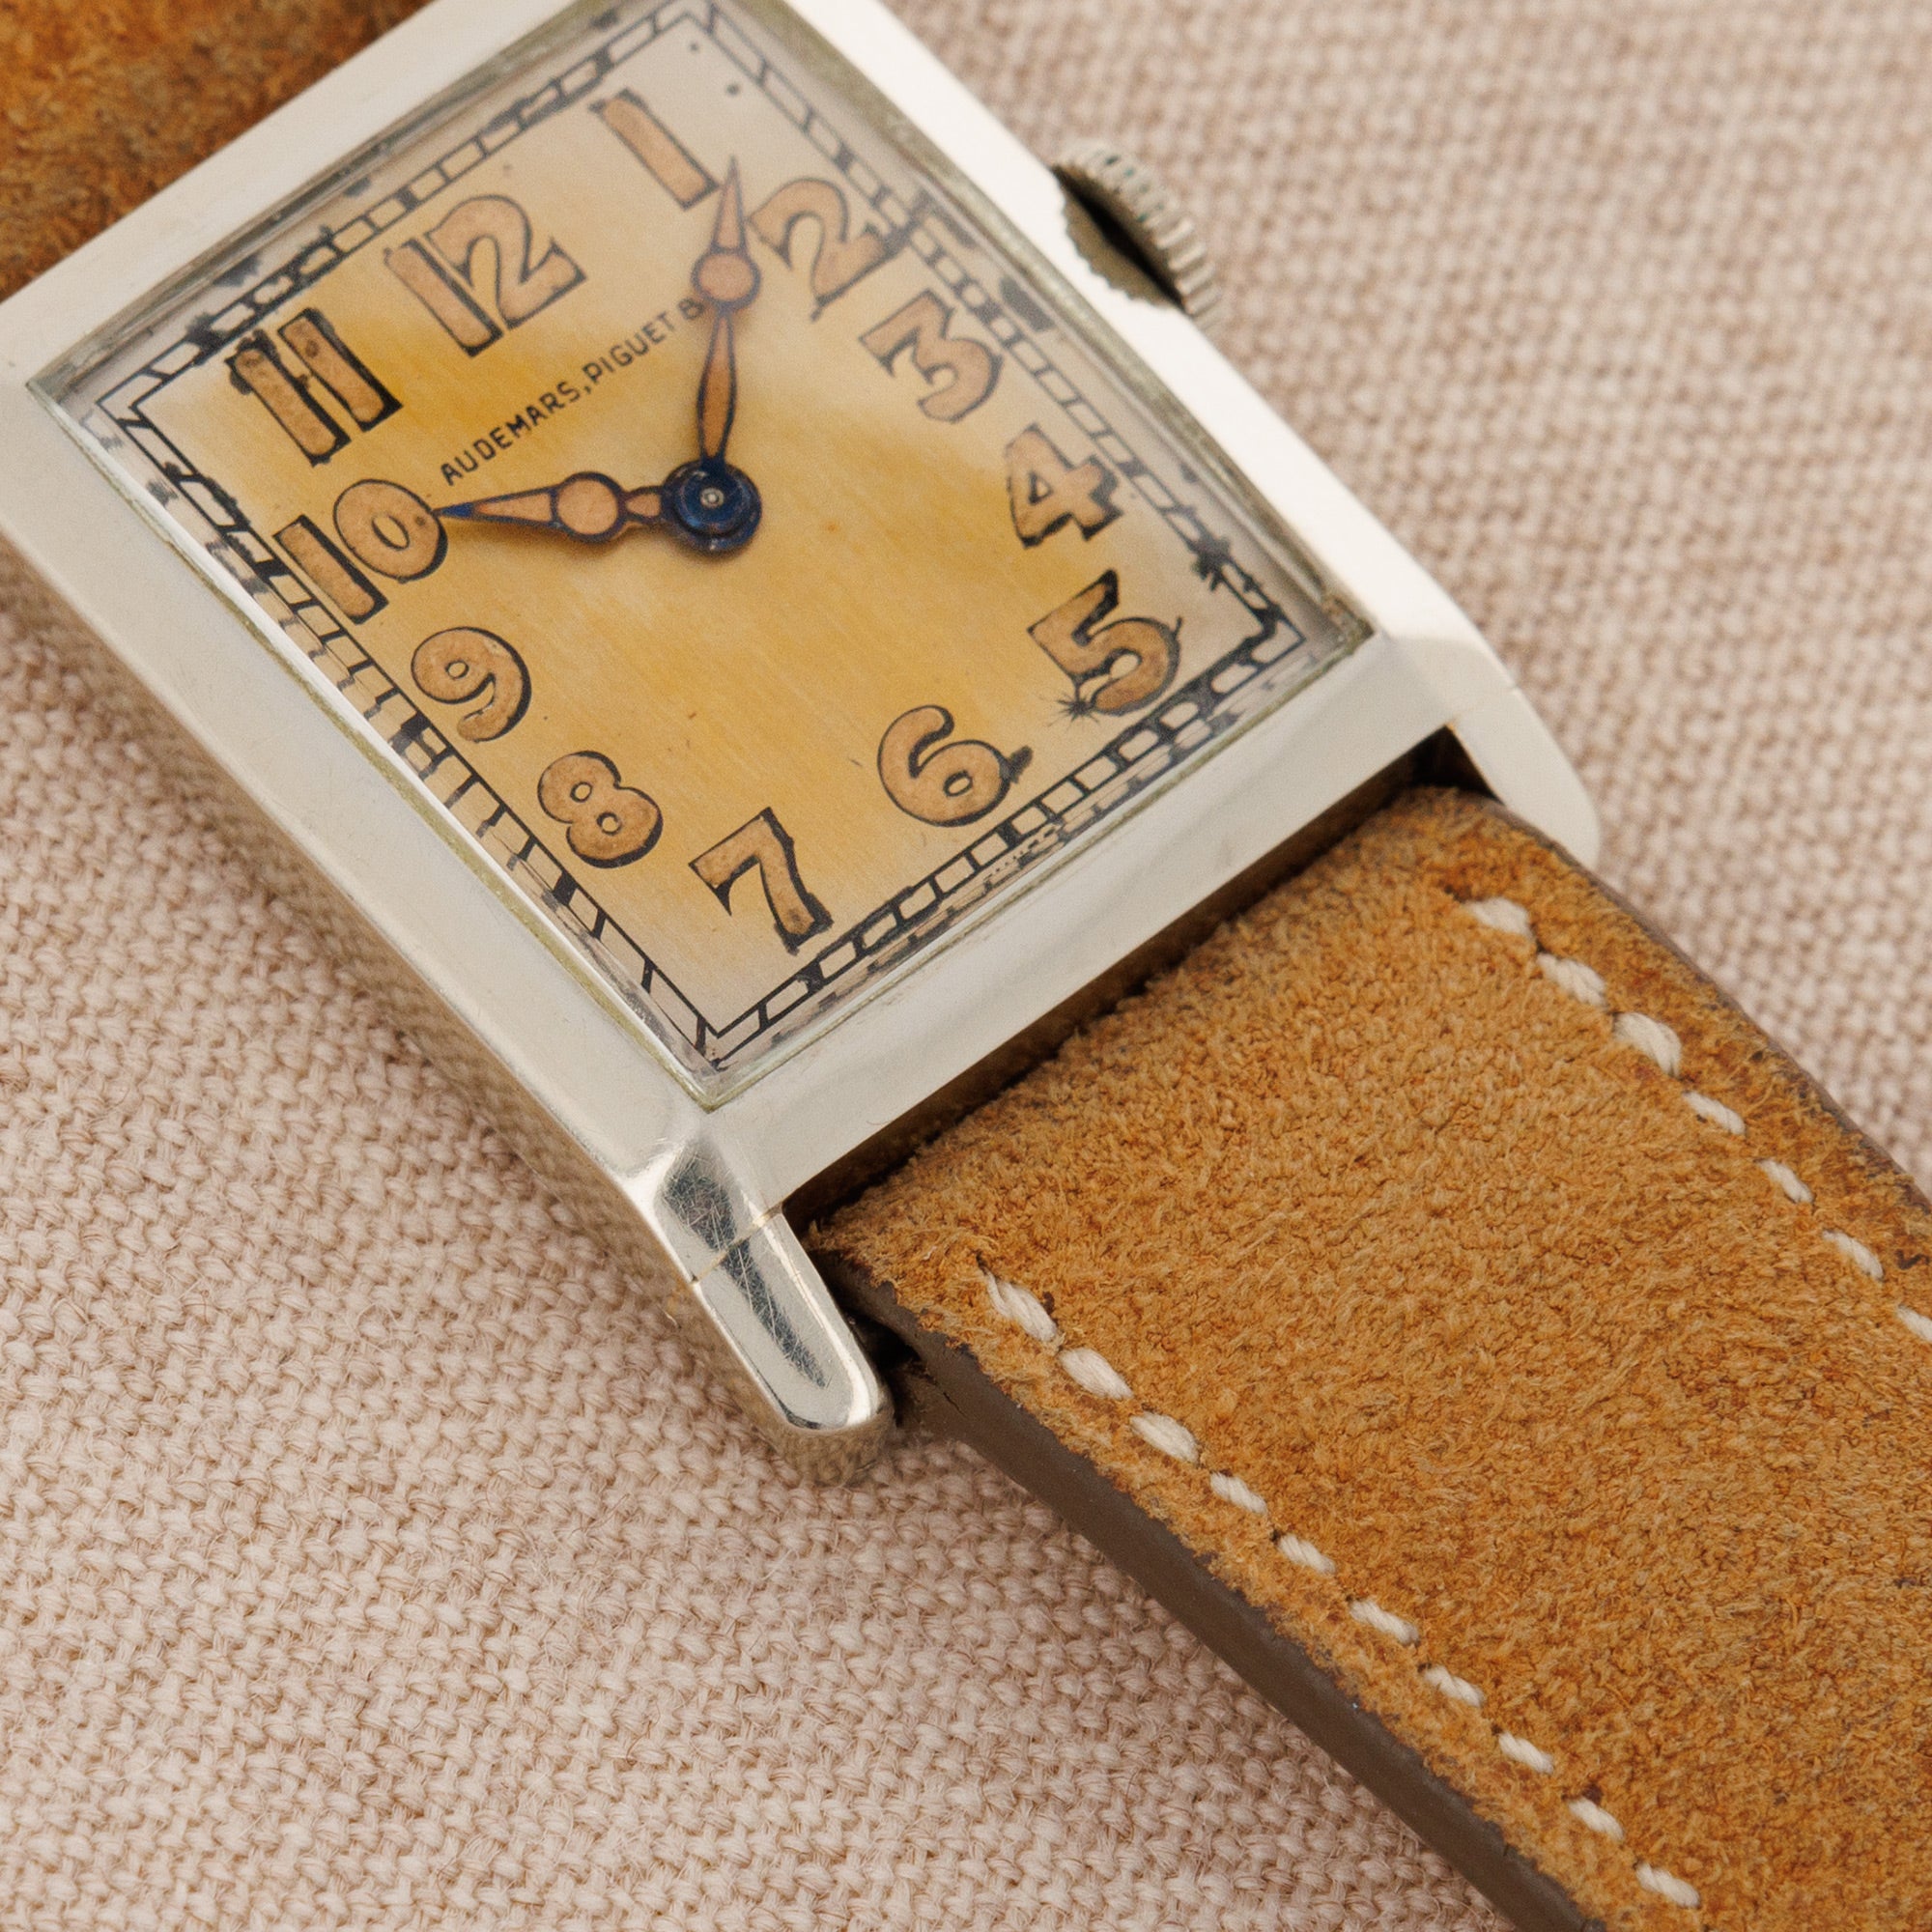 Audemars Piguet - Audemars Piguet White Gold Tank Watch with Luminous Arabic Numerals - The Keystone Watches